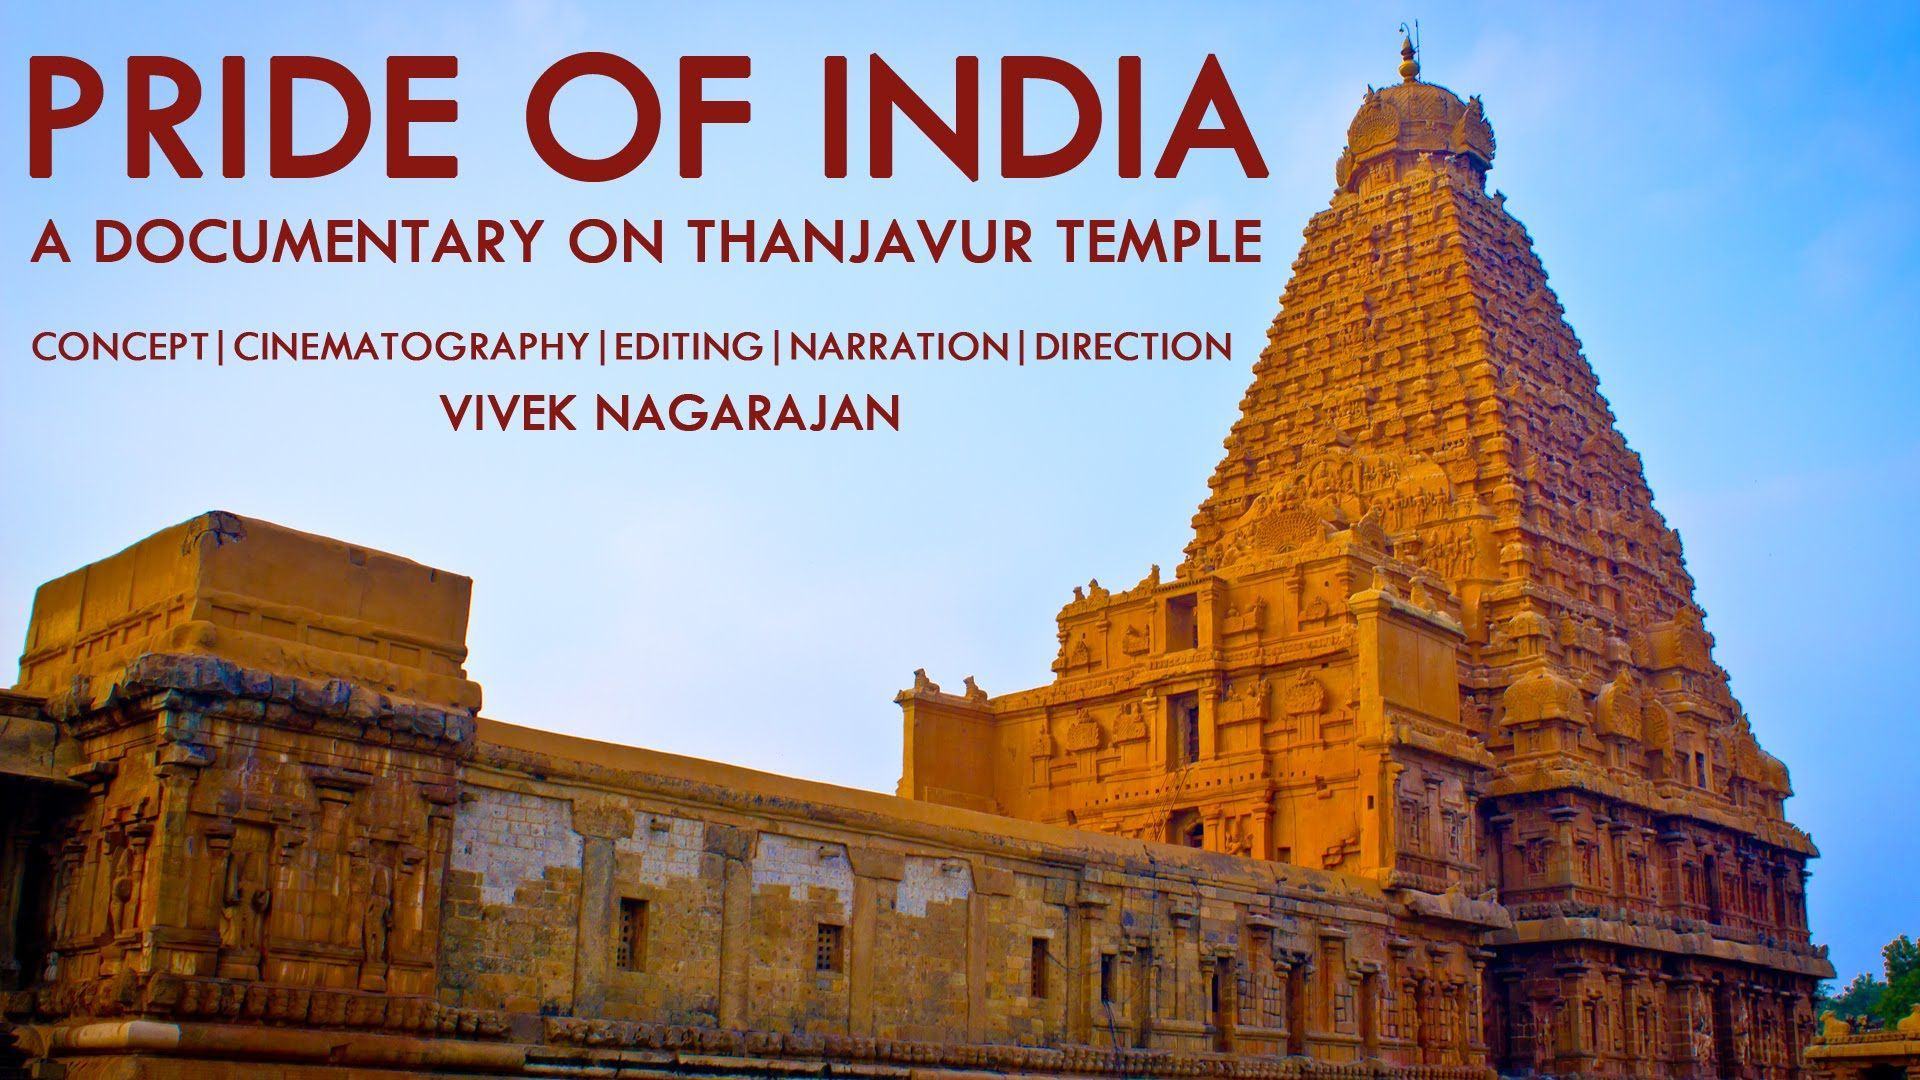 PRIDE OF INDIA Documentary On Thanjavur Big Temple. Vivek Nagarajan. Temple, Documentaries, Thanjavur